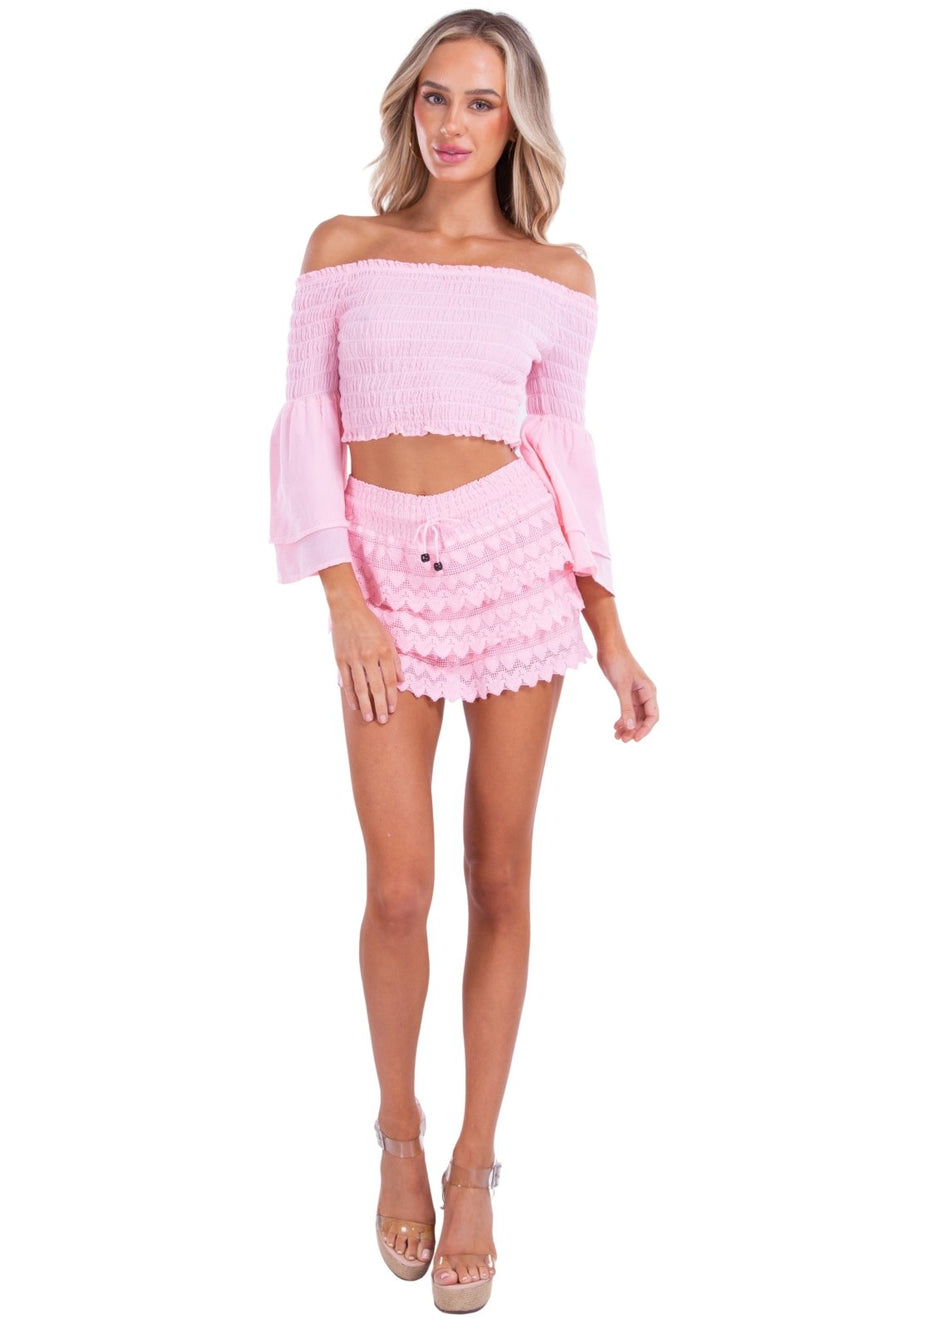 100% Cotton 'Polly' Tiered Crochet Skort Baby Pink - Seaspice Resort Wear